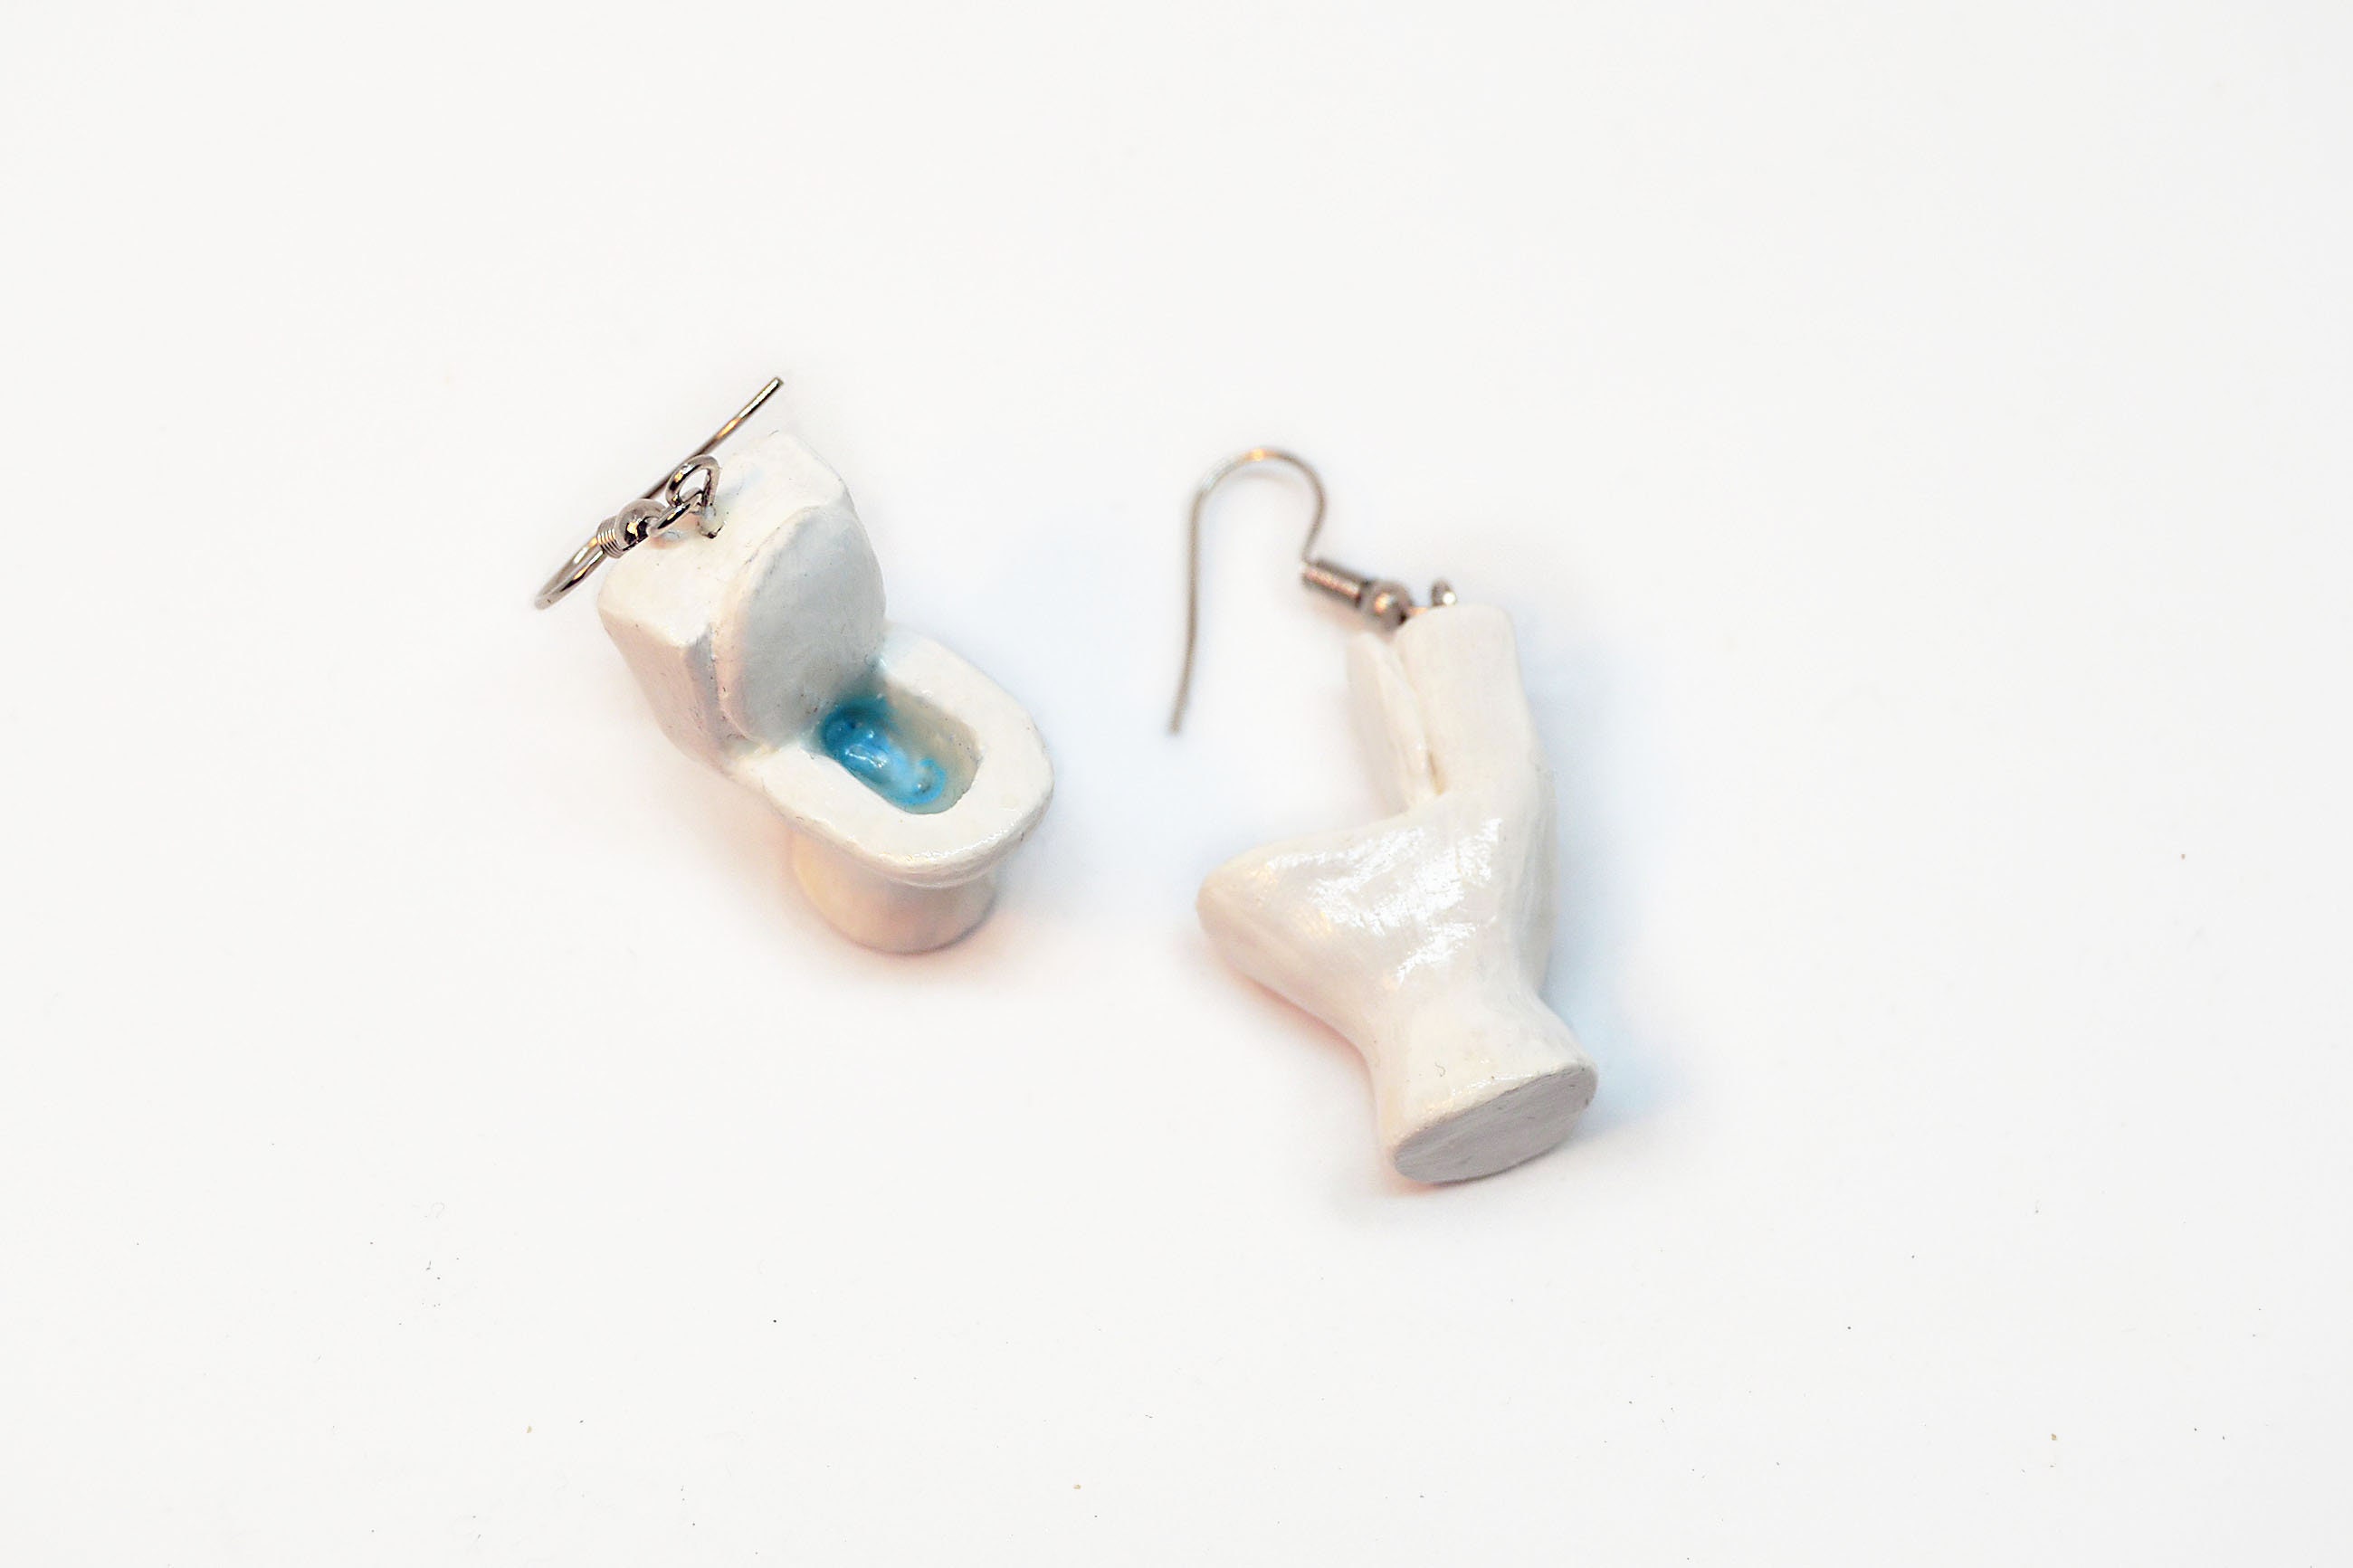 TOILET Privy Lavatory Loo Commode Bathroom Earrings Funny Jewelry UPICK  Hardware